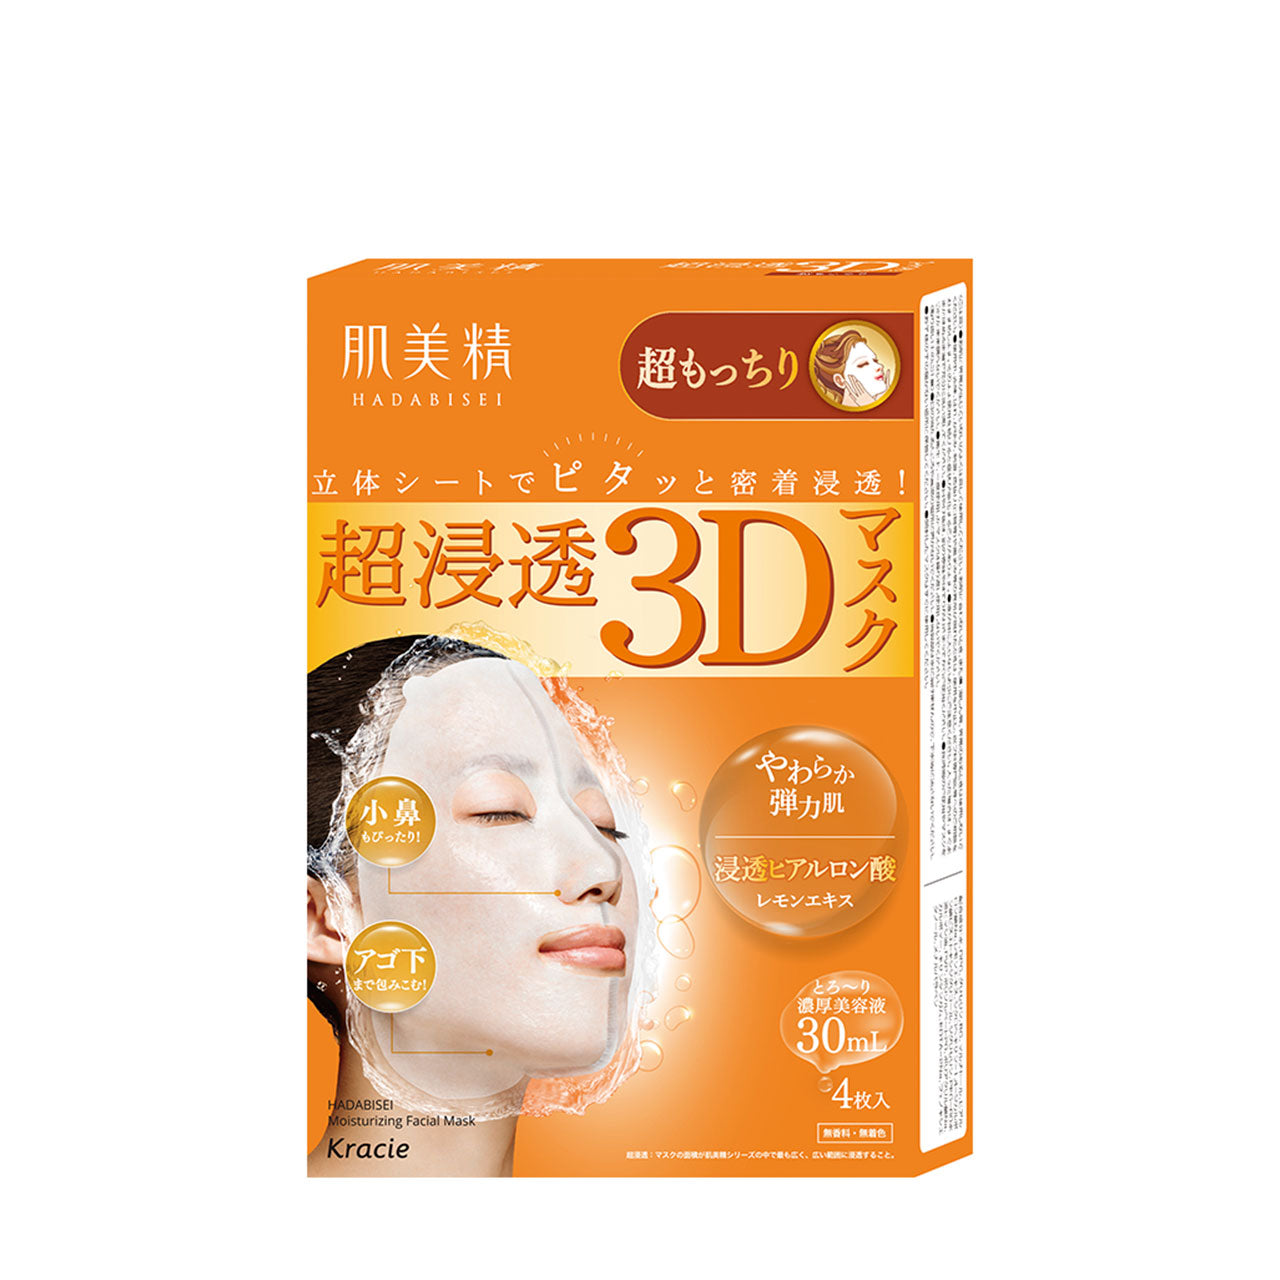 Kracie Hadabisei Advanced Penetrating 3D Face Mask Super Suppleness 4PCS